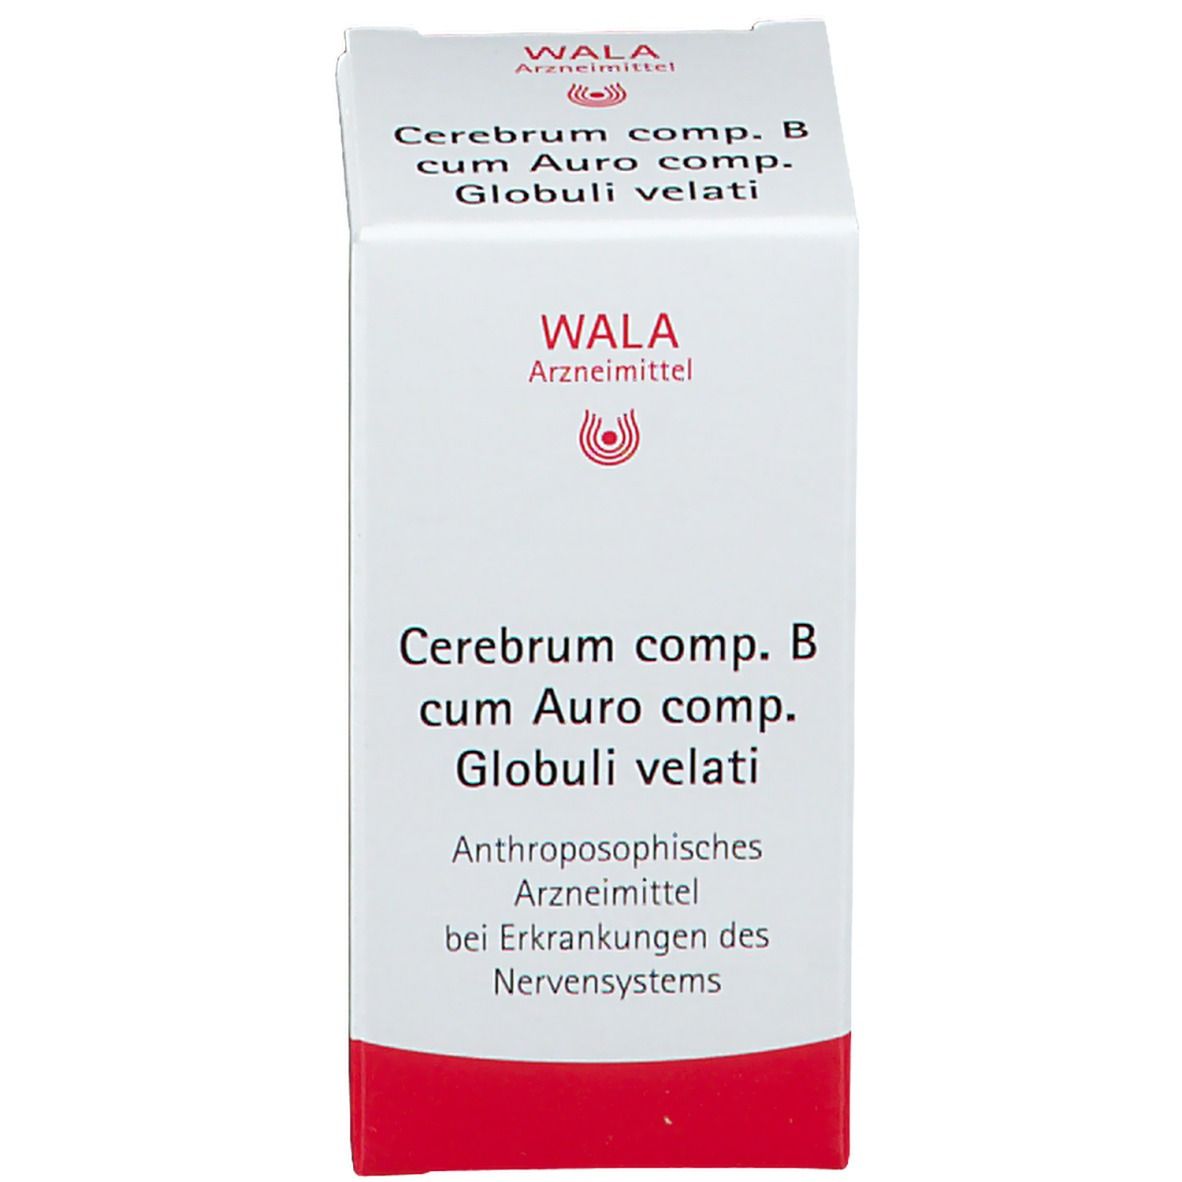 WALA® Cerebrum Comp. B c. Auro comp. Globuli